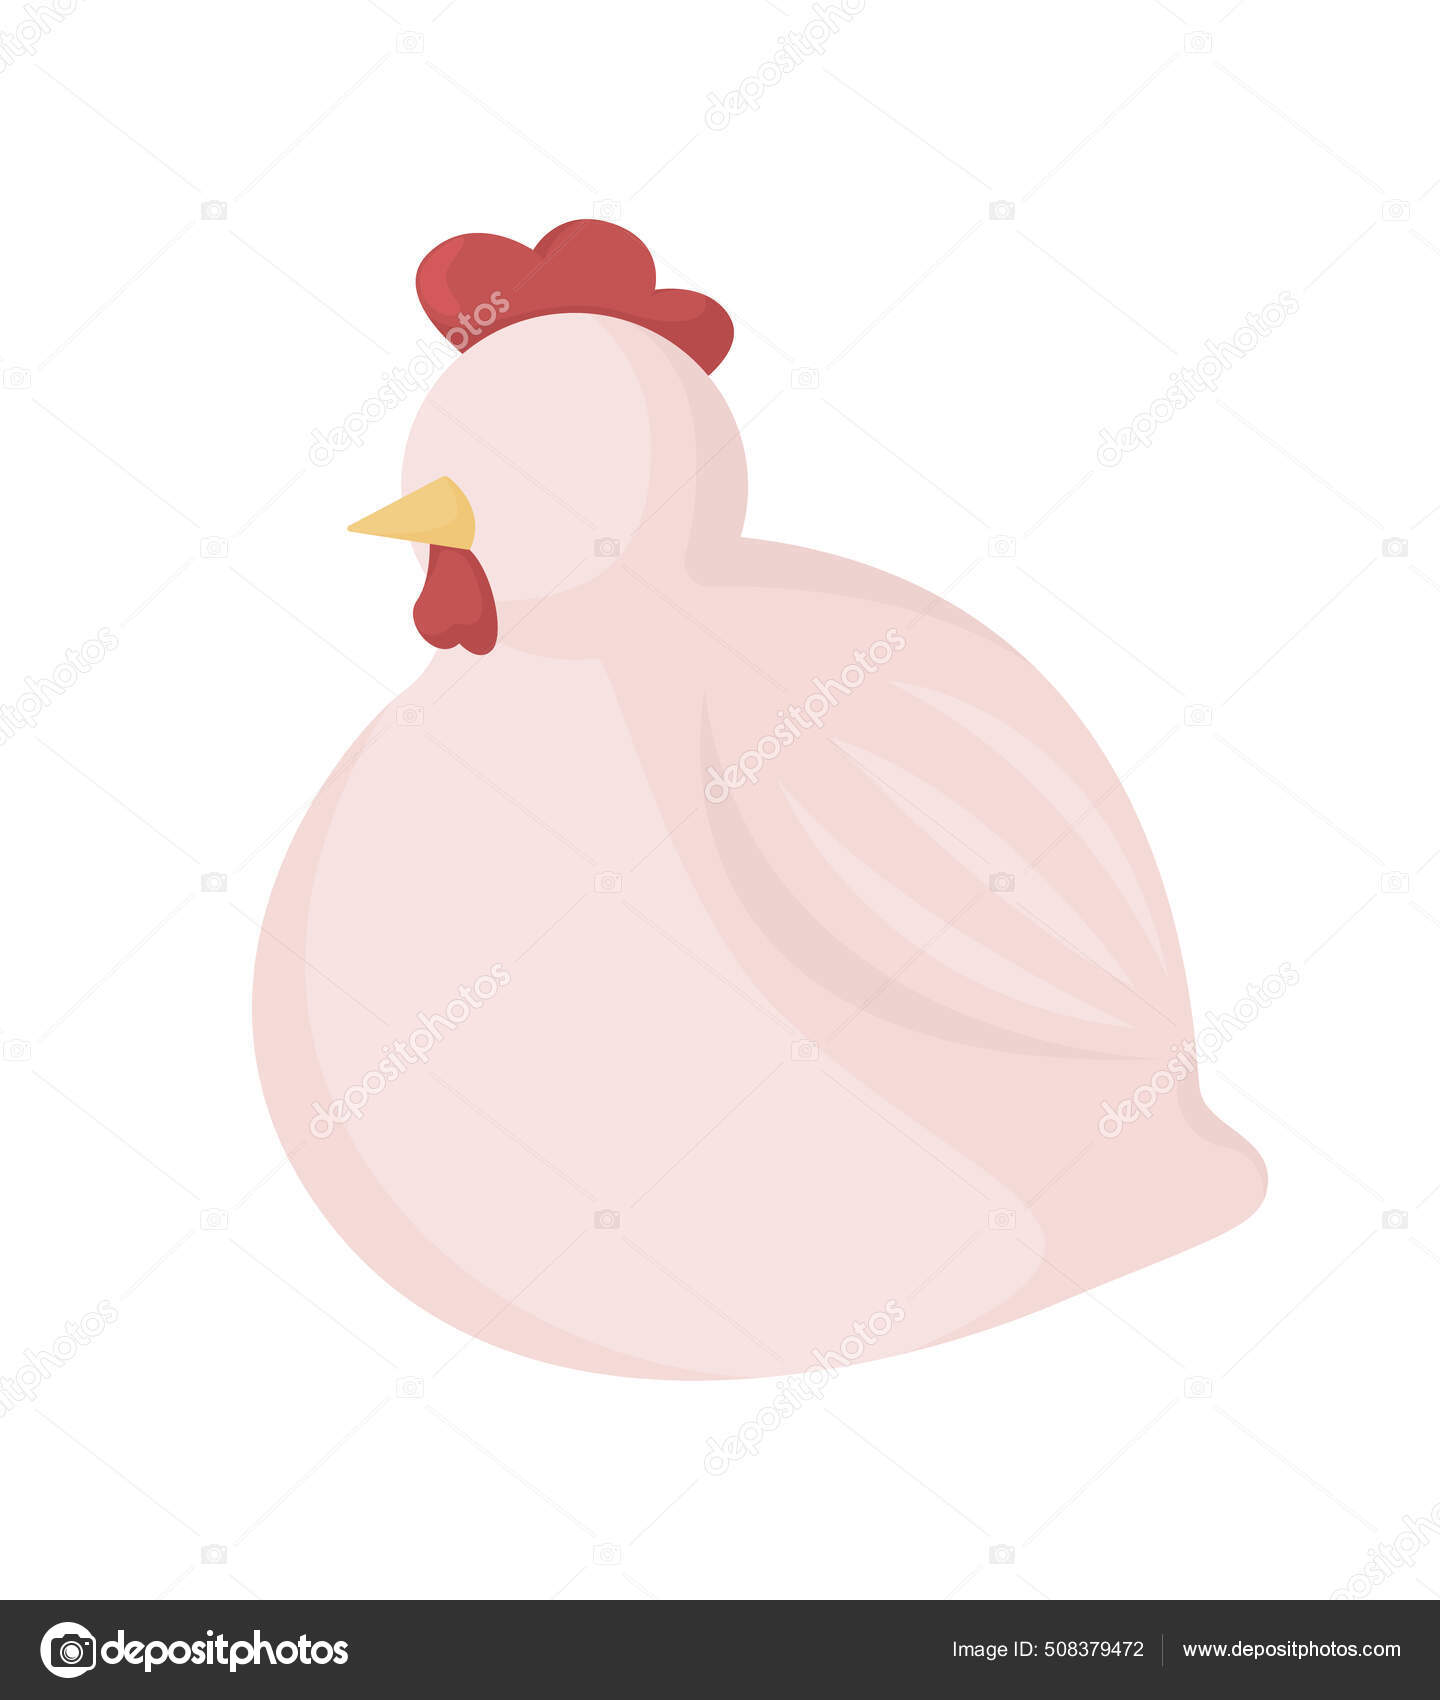 Desenhos animados coloridos isolados animais galinha e galo